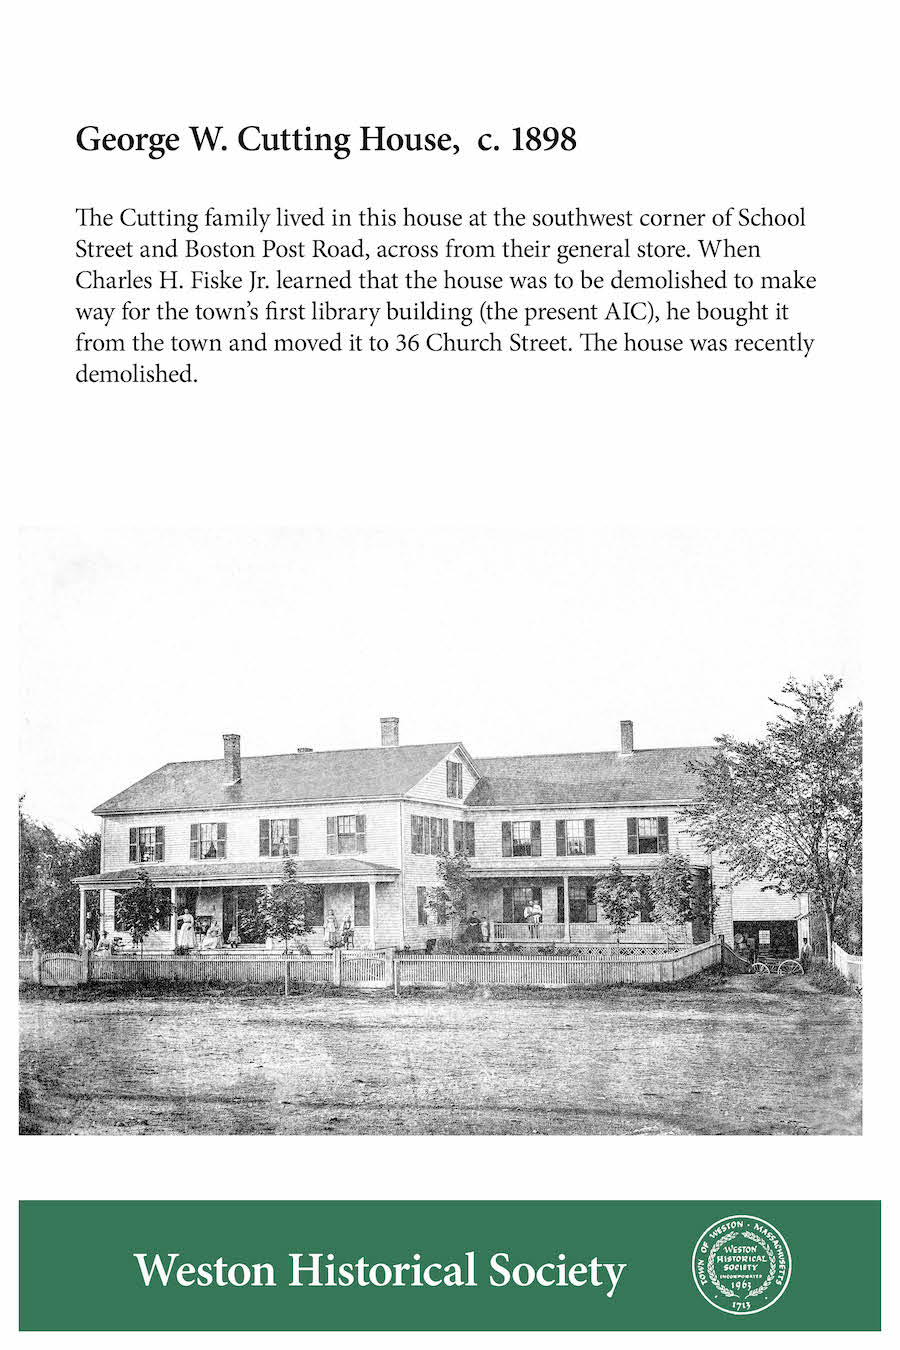 George W. Cutting House, circa 1898.